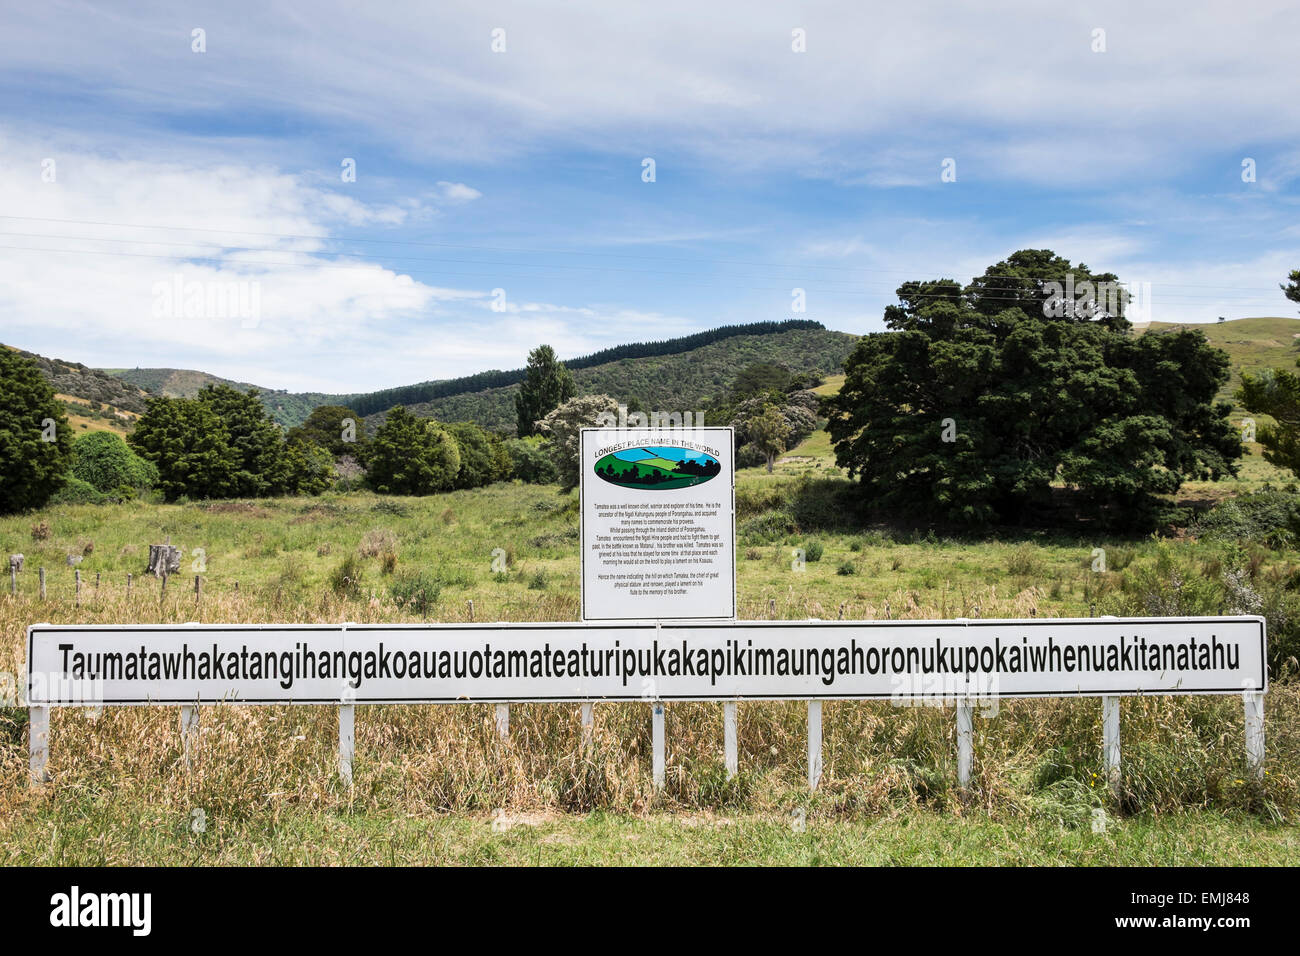 Taumatawhakatangihangakoauauotamateaturipukakapikimaungahoronukupokaiwhenuakitanatahu nom de lieu le plus long au monde, en Nouvelle Zélande Banque D'Images